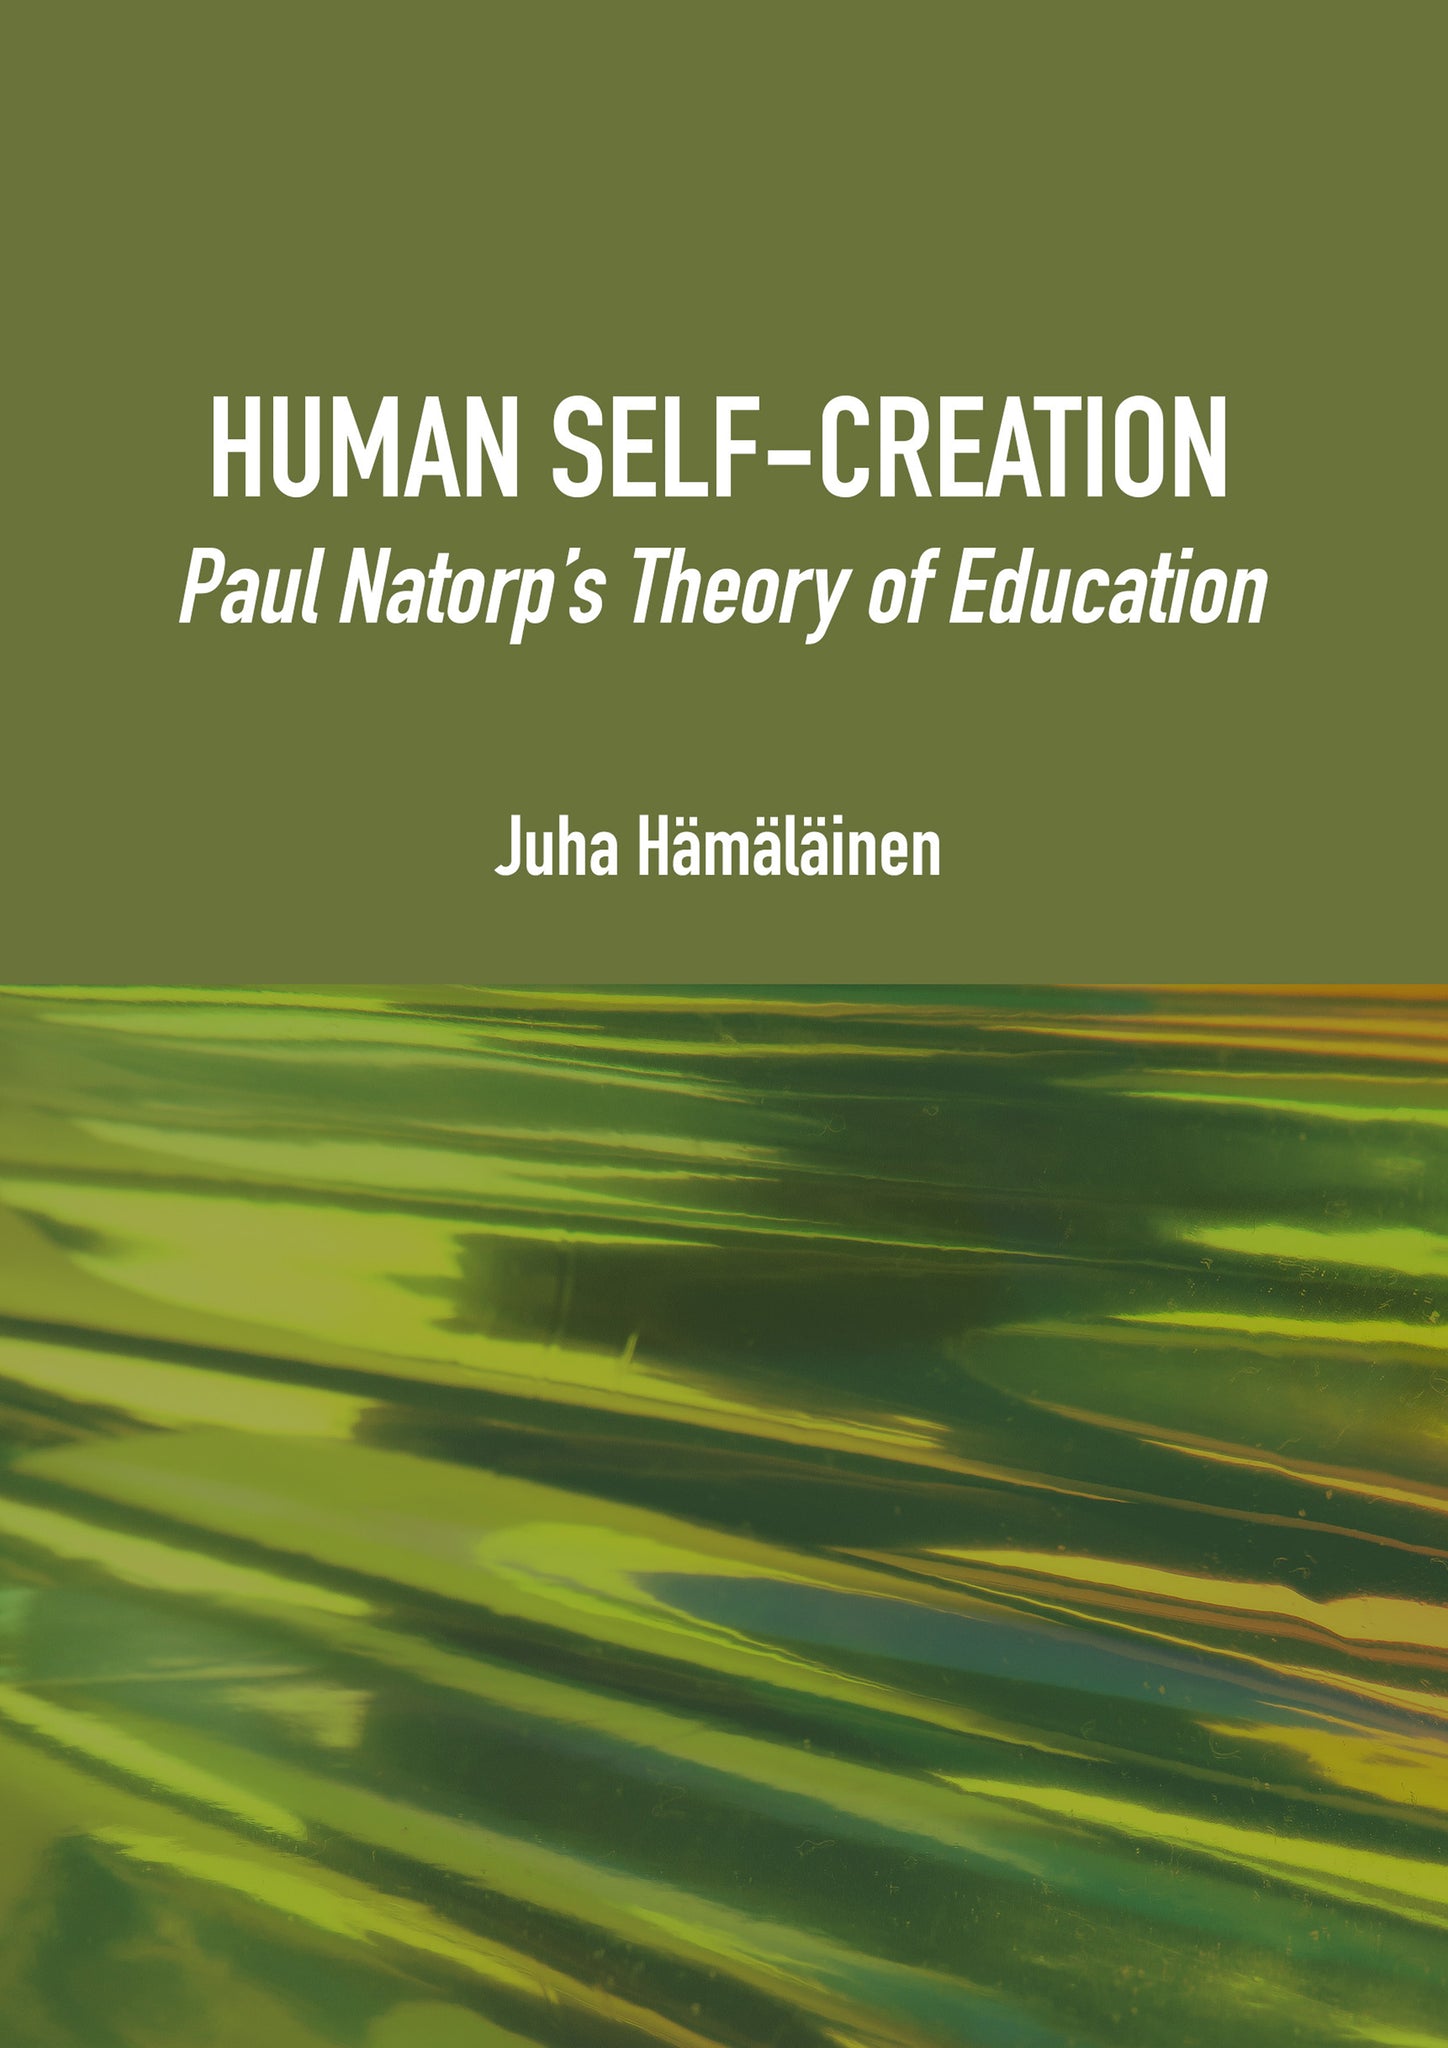 Human Self-Creation: Paul Natorp’s Theory of Education